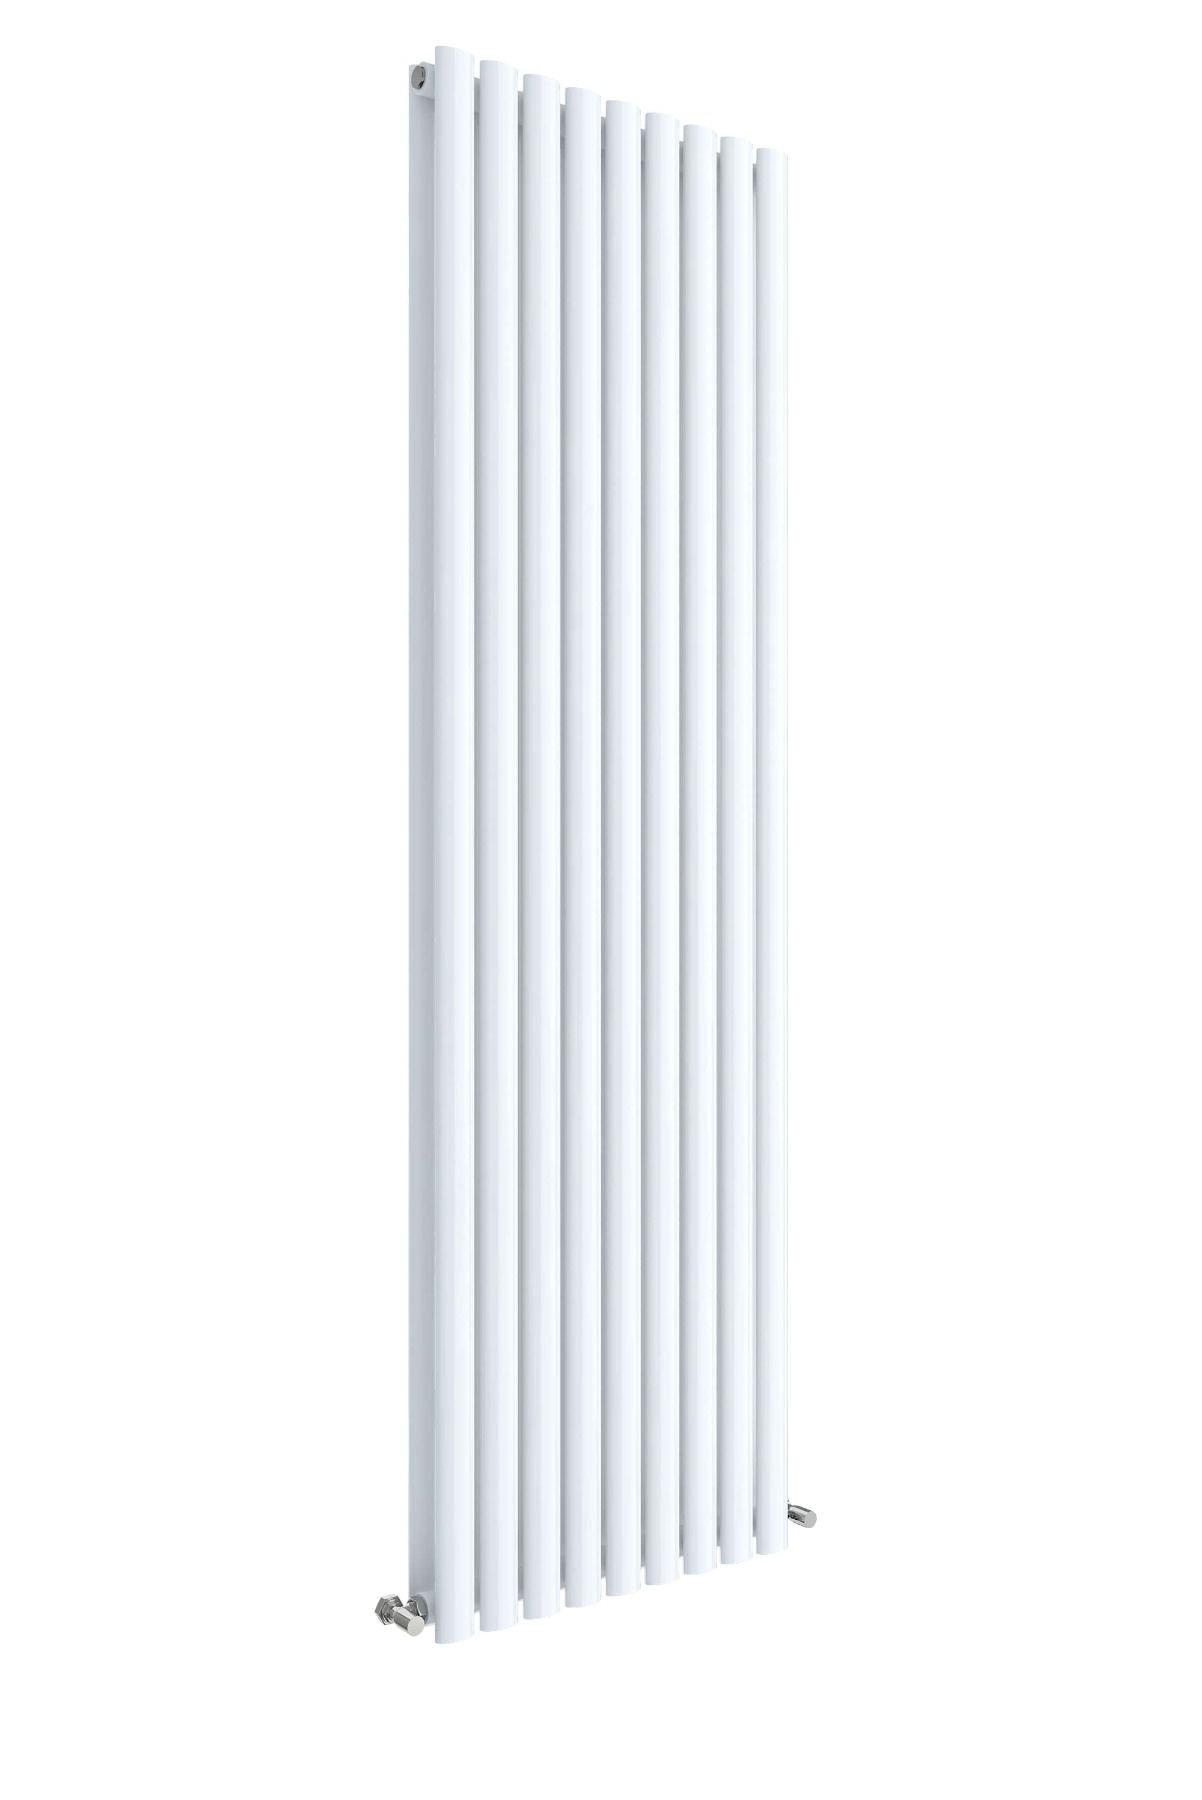 Arno Satin White Round Double Panel Vertical Designer Radiators 1800 x 528mm